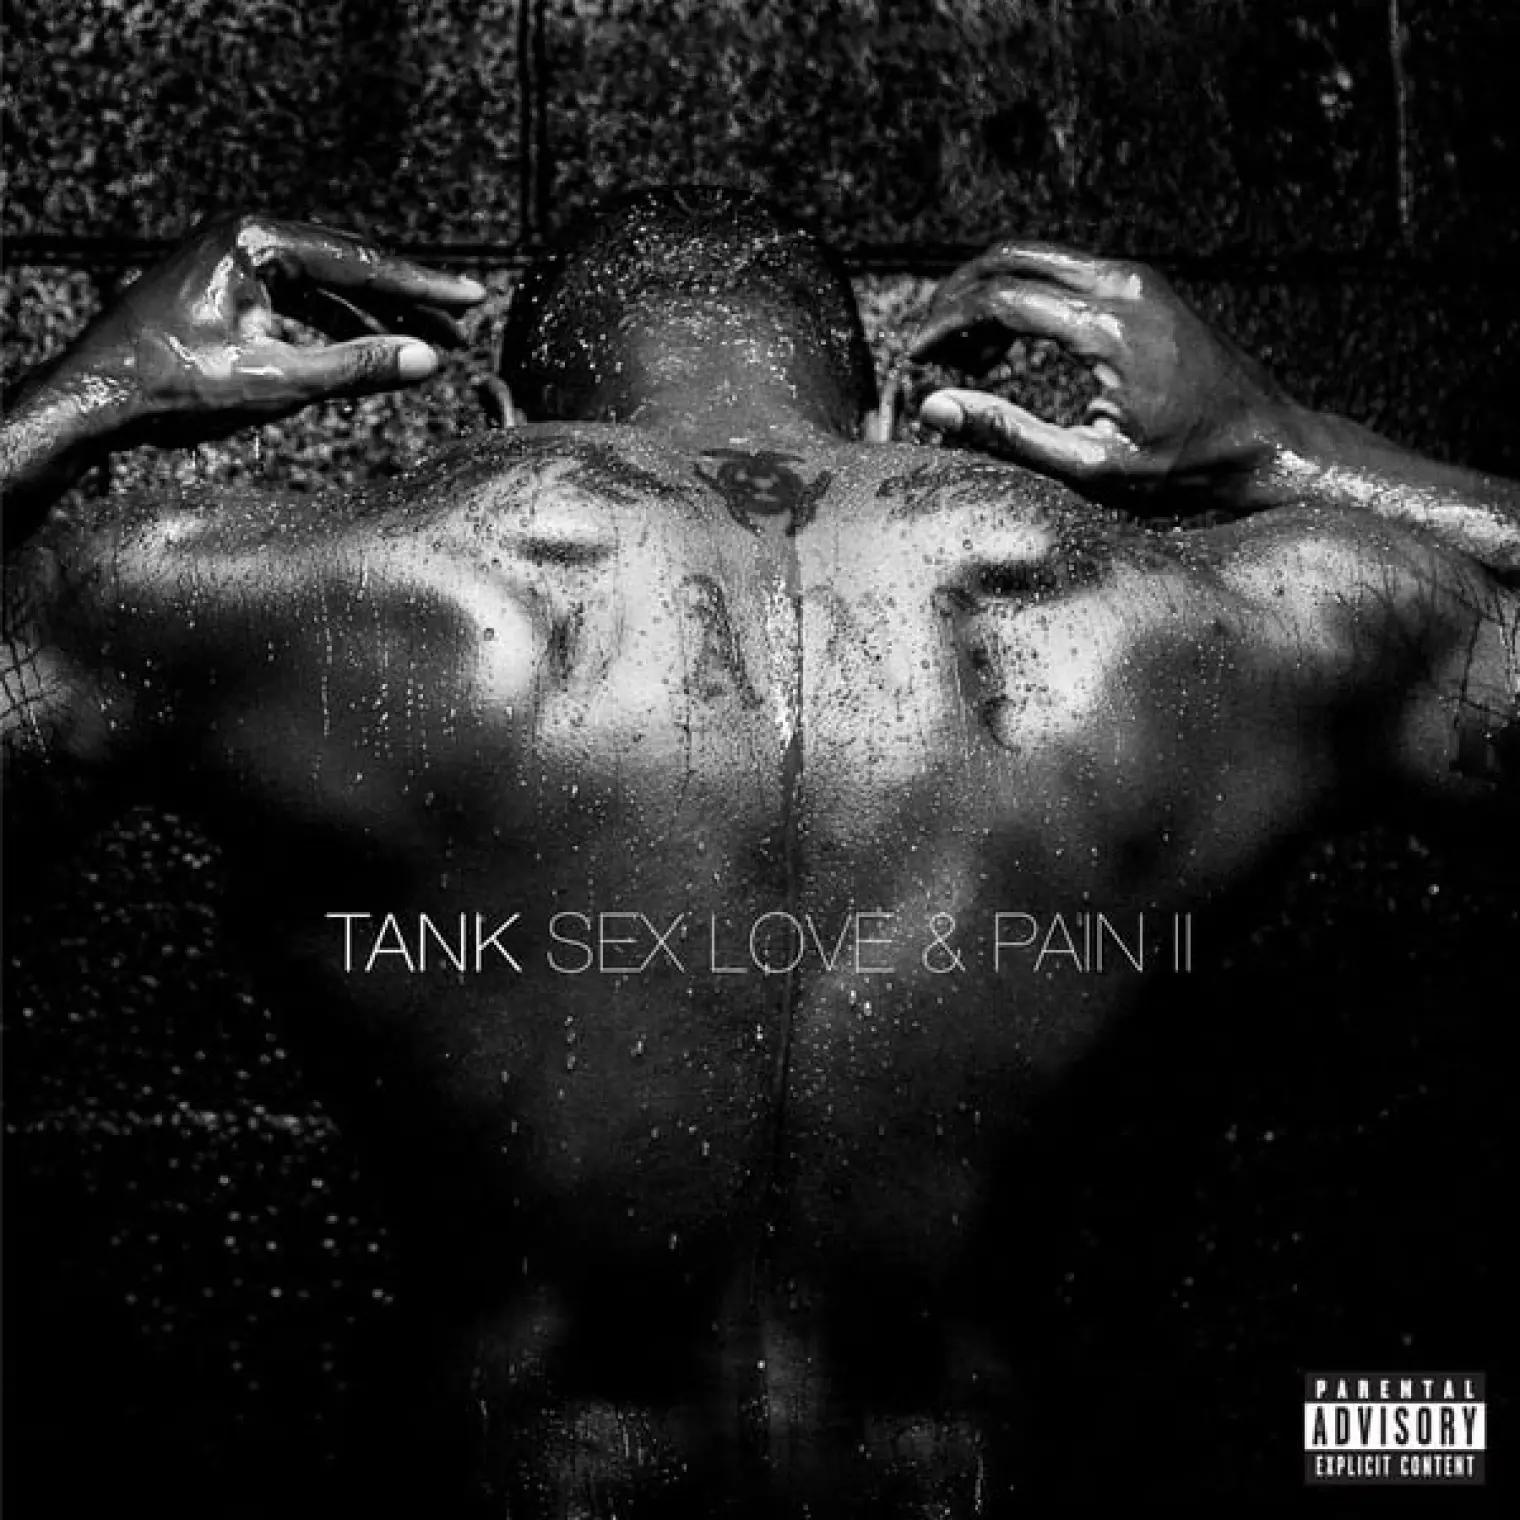 Sex, Love & Pain II -  Tank 